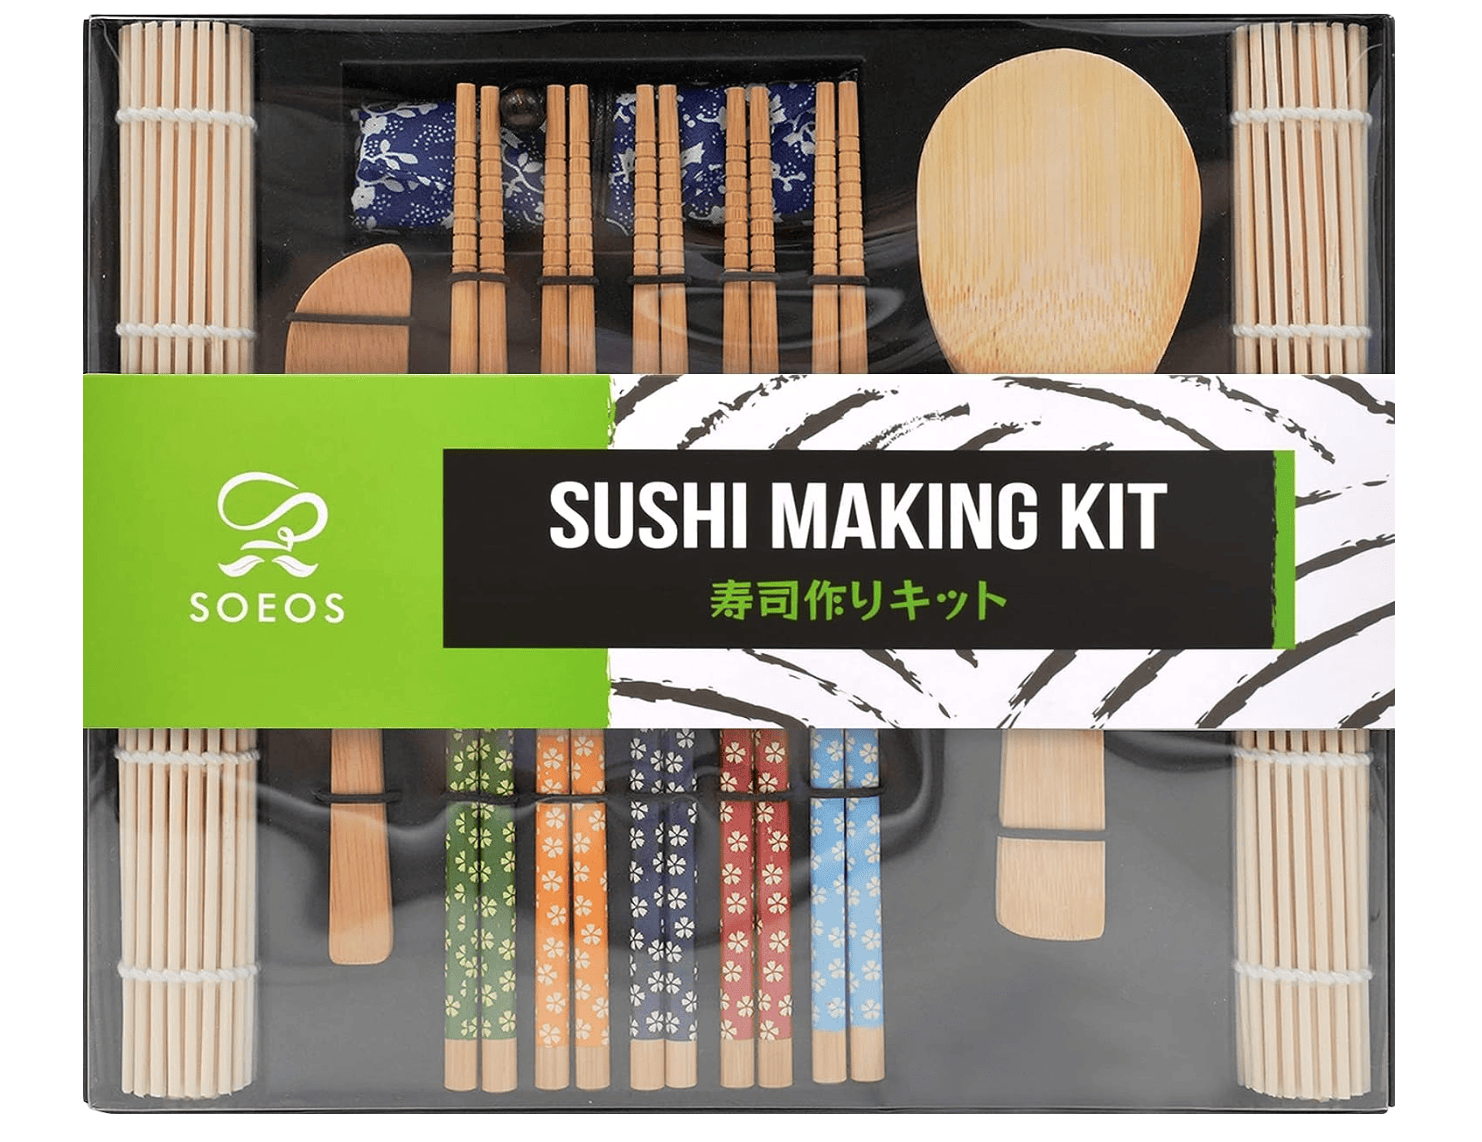 Sushi Making Kit Bamboo Sushi Maker Professional Sushi Starter Kit